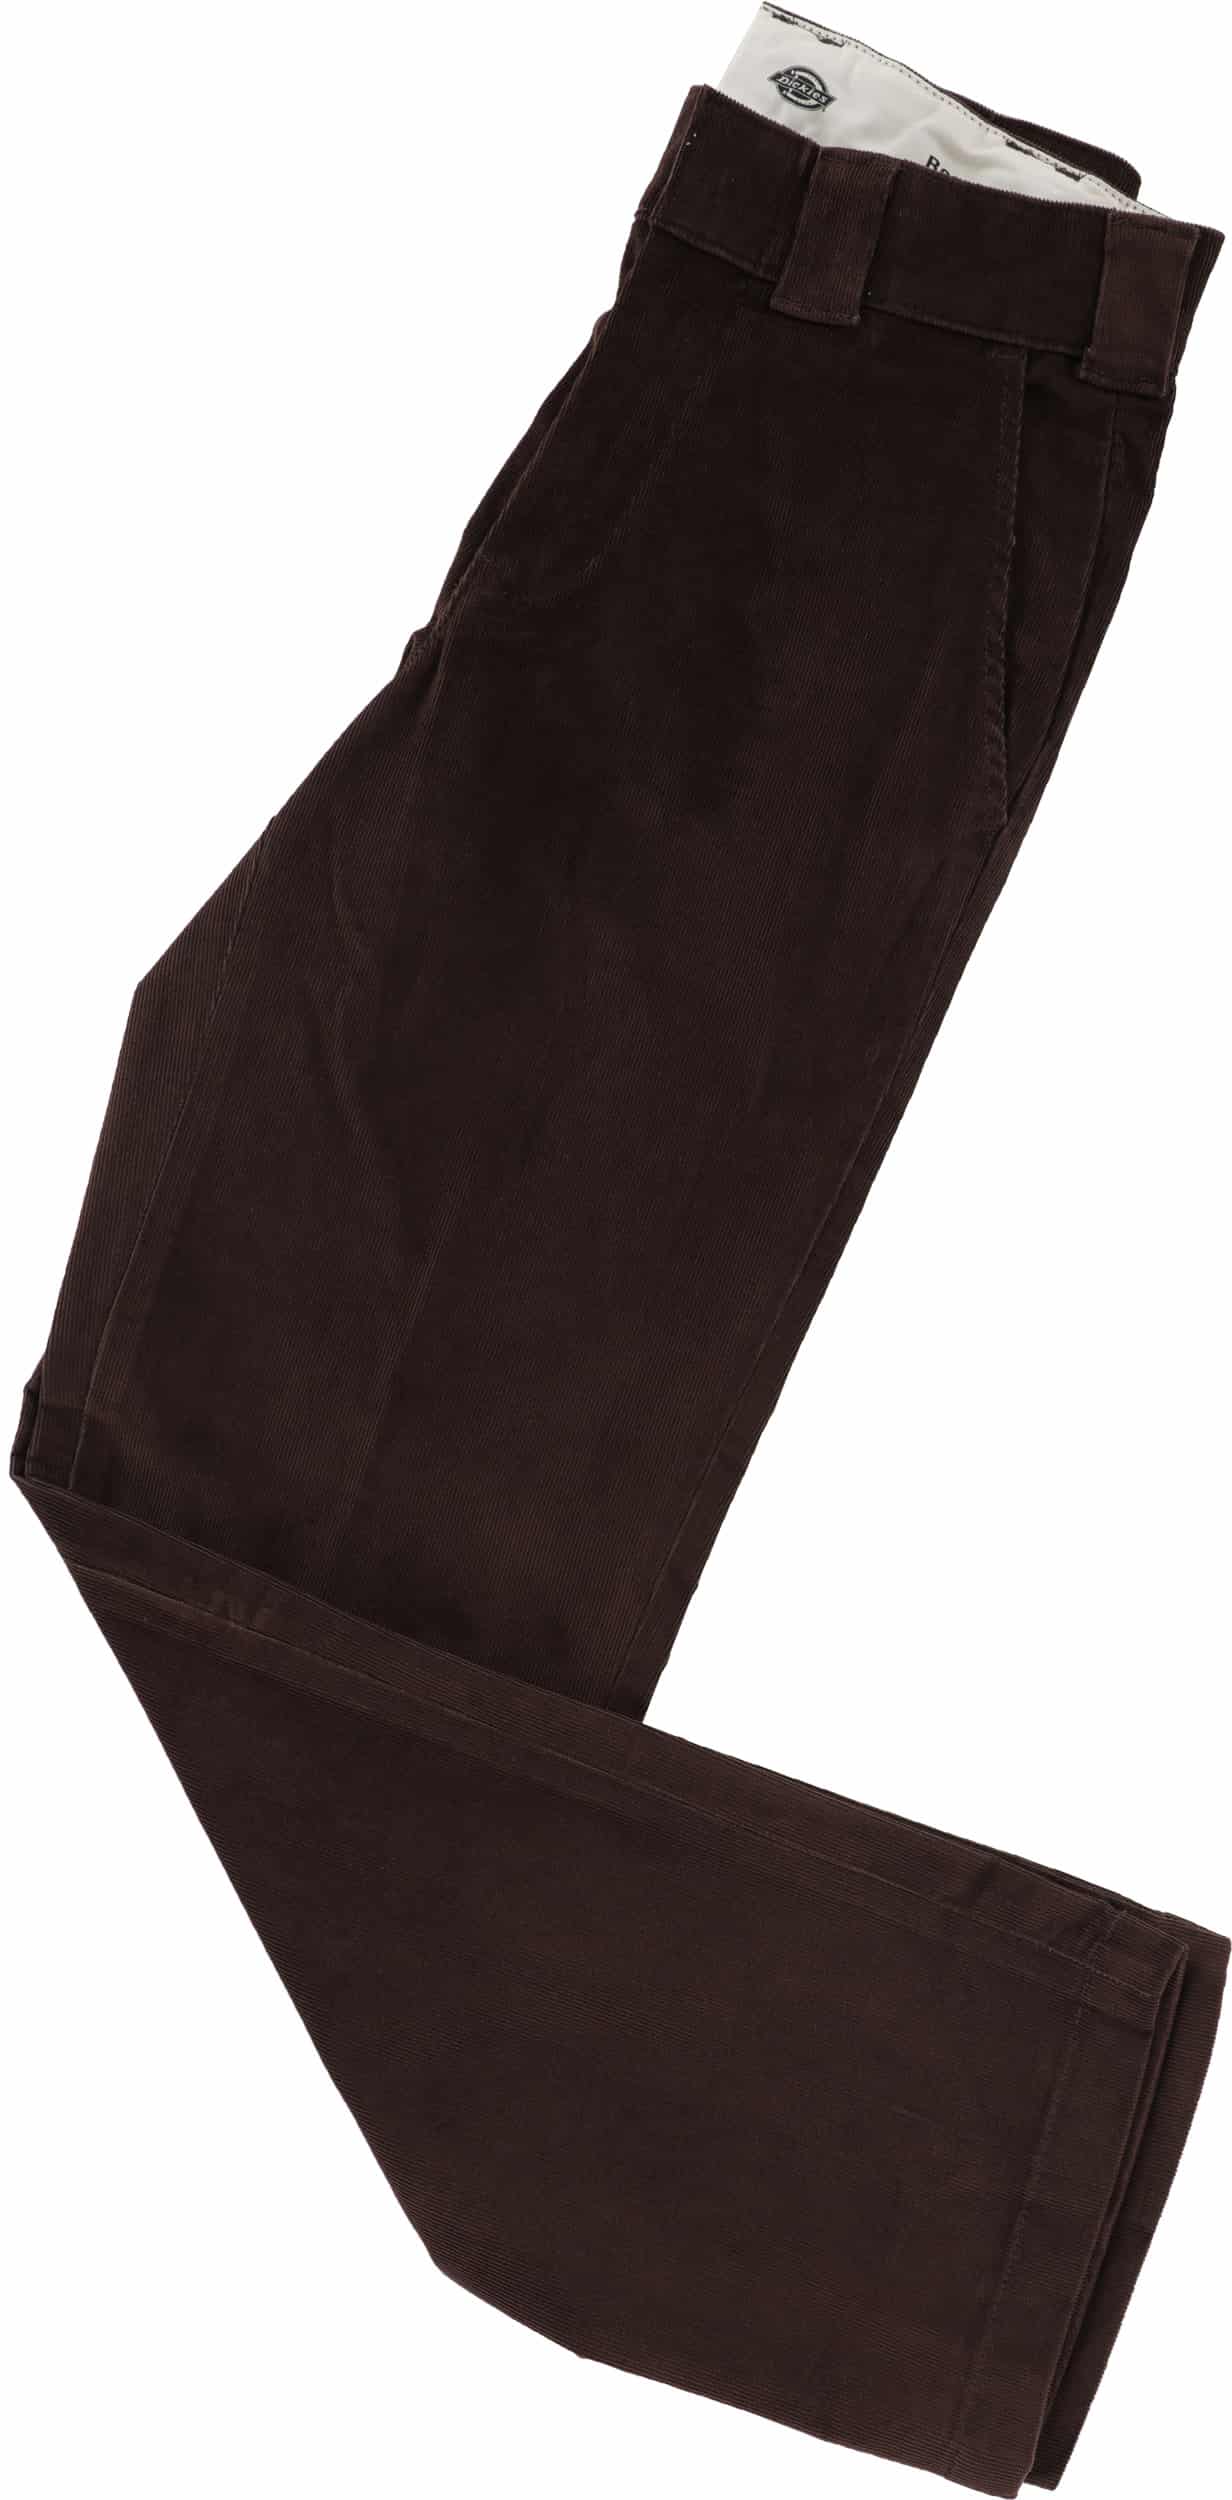 Dickies Flat Front Corduroy Pants - chocolate brown | Tactics